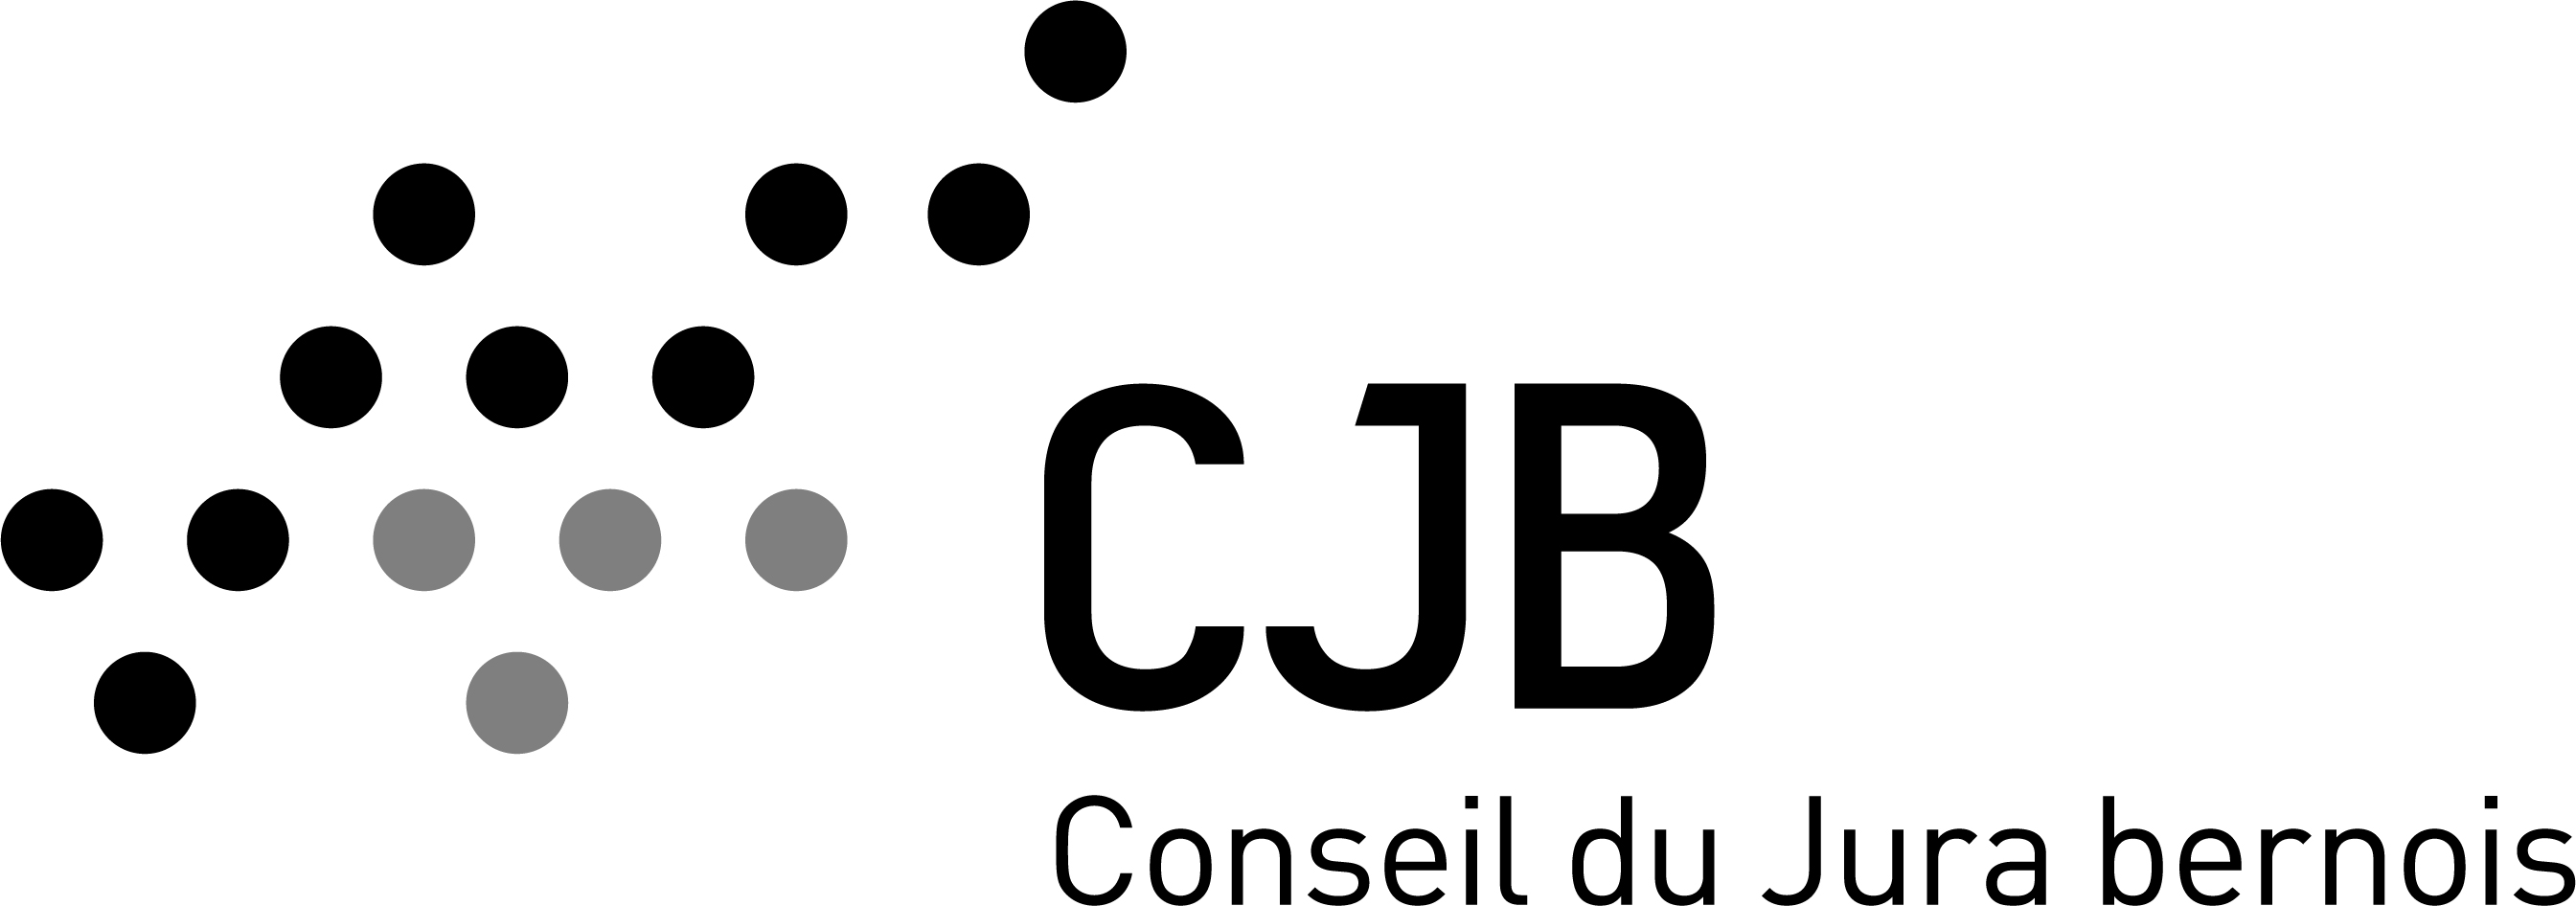 logo CJB 2018 logo NB Actualité